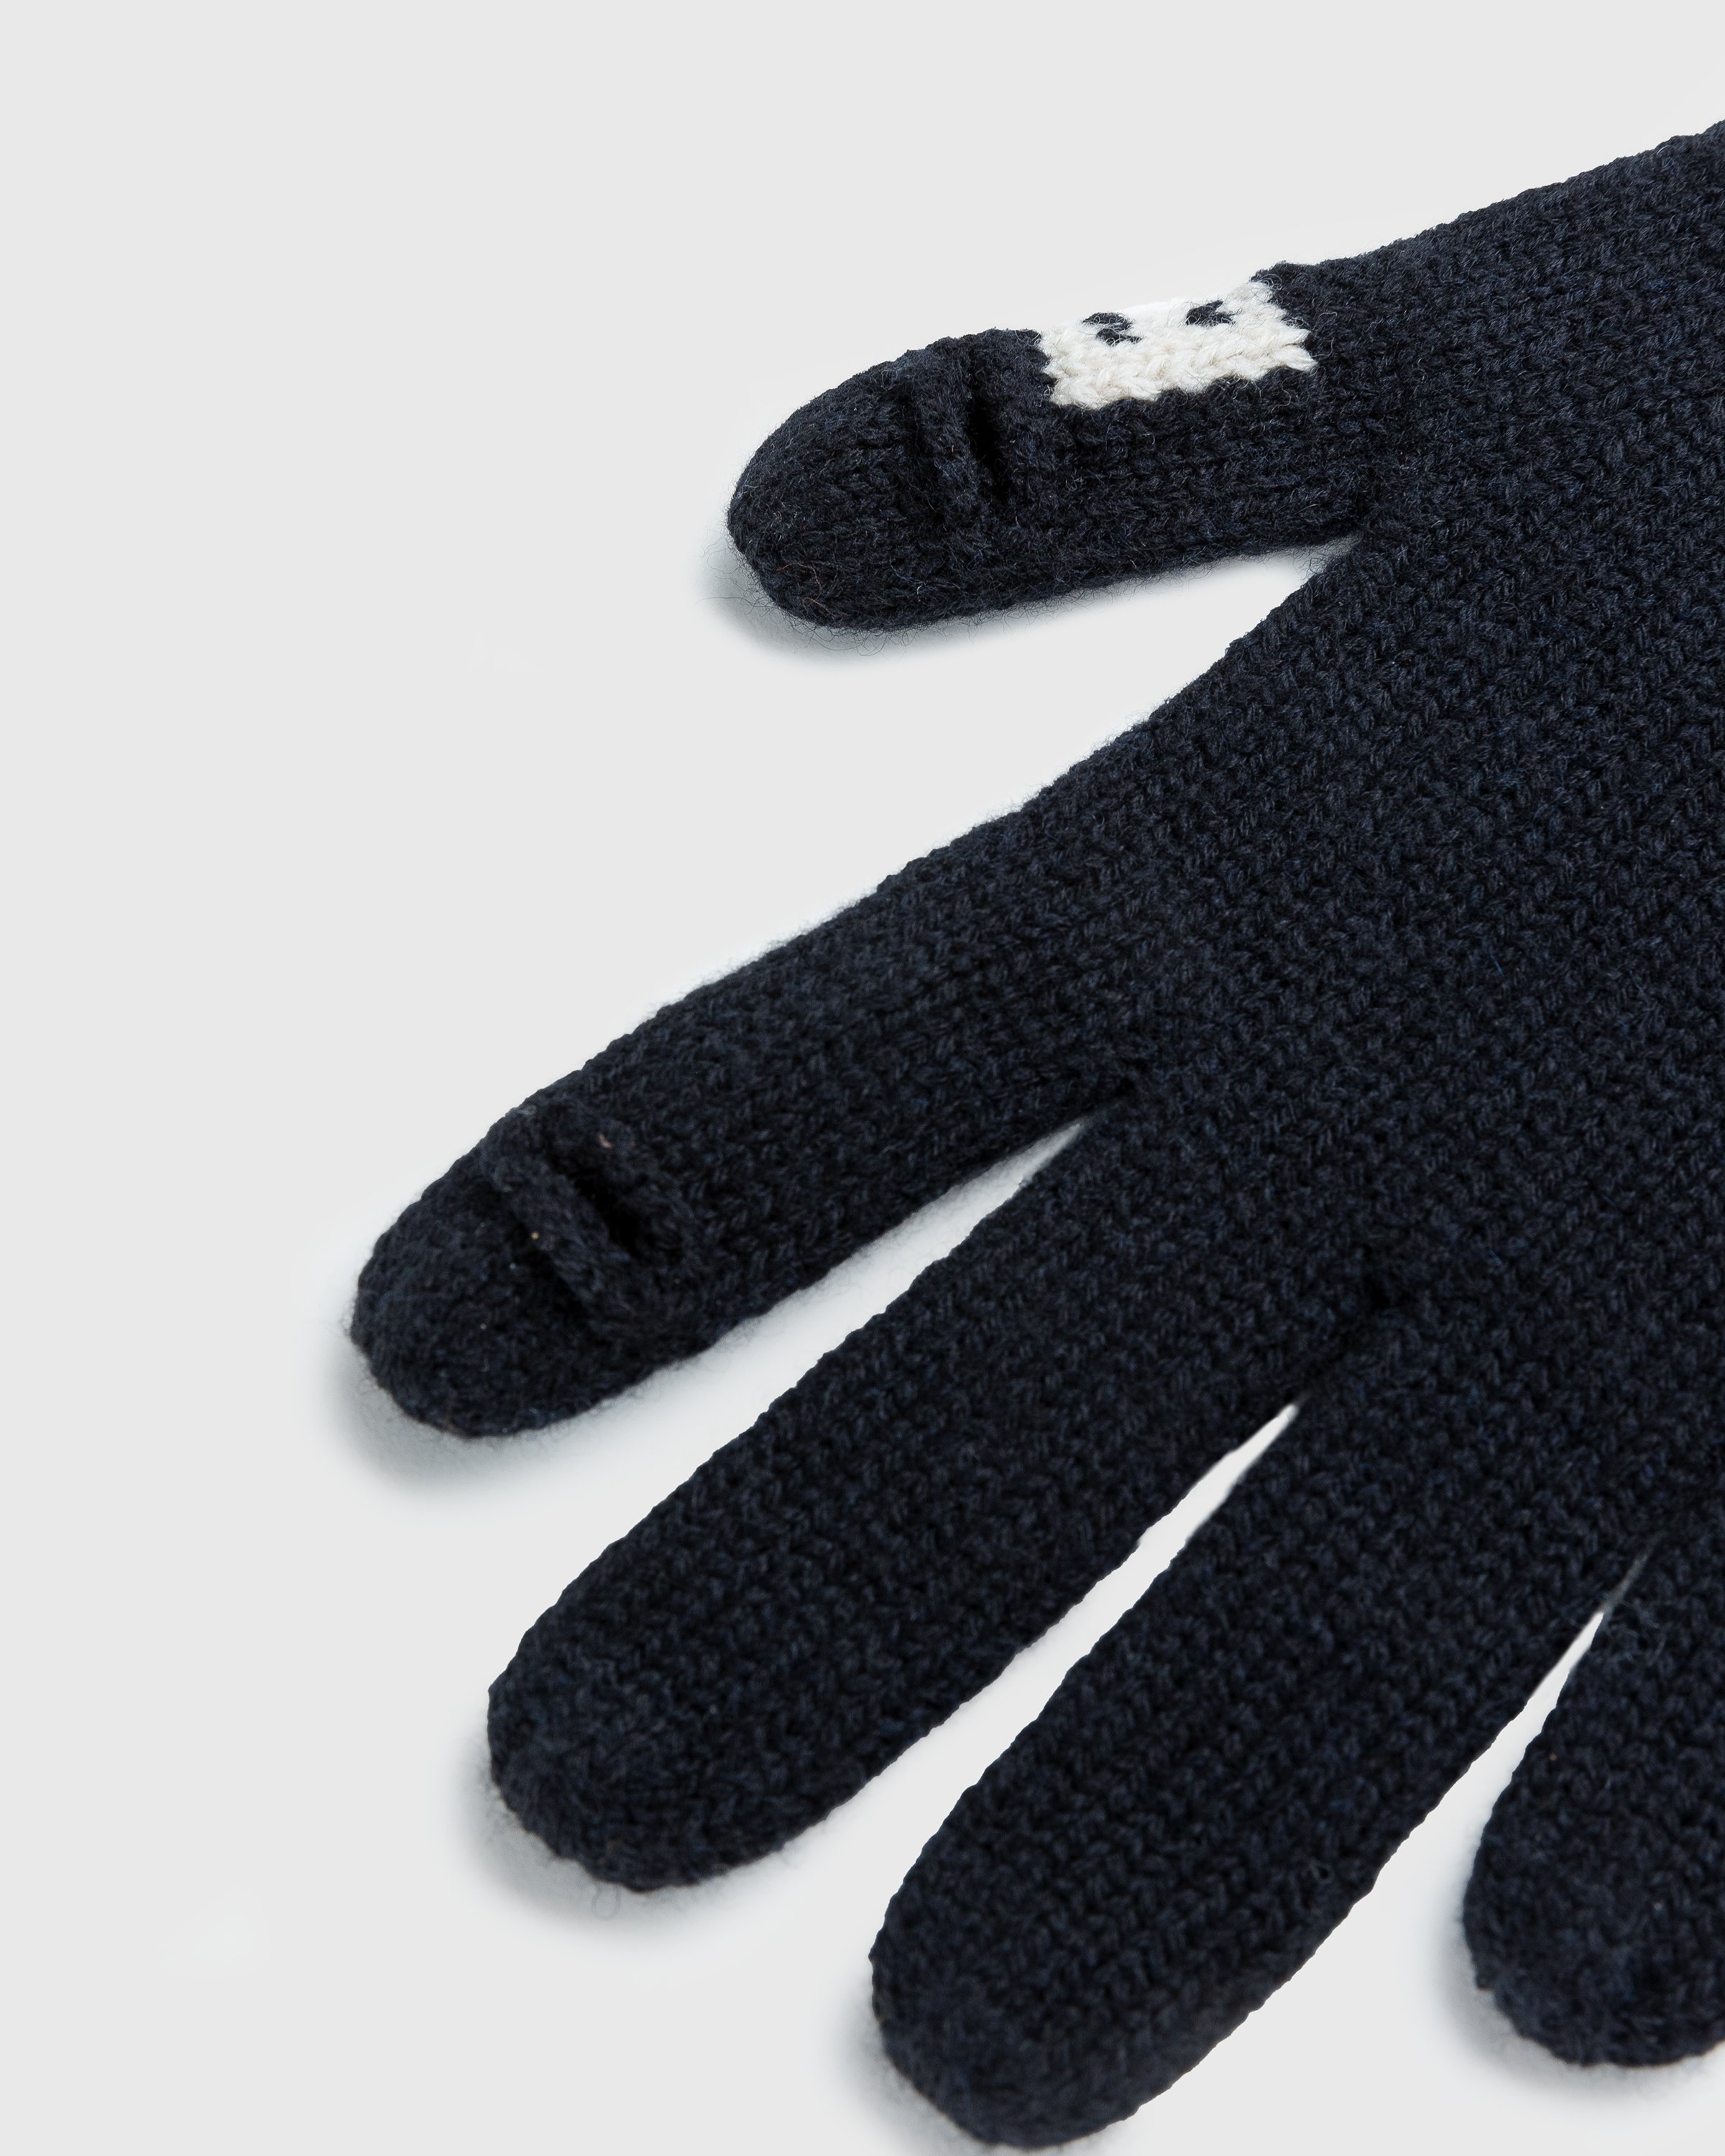 Acne Studios - Knit Gloves Black/Oatmeal Melange - Accessories - Black - Image 3